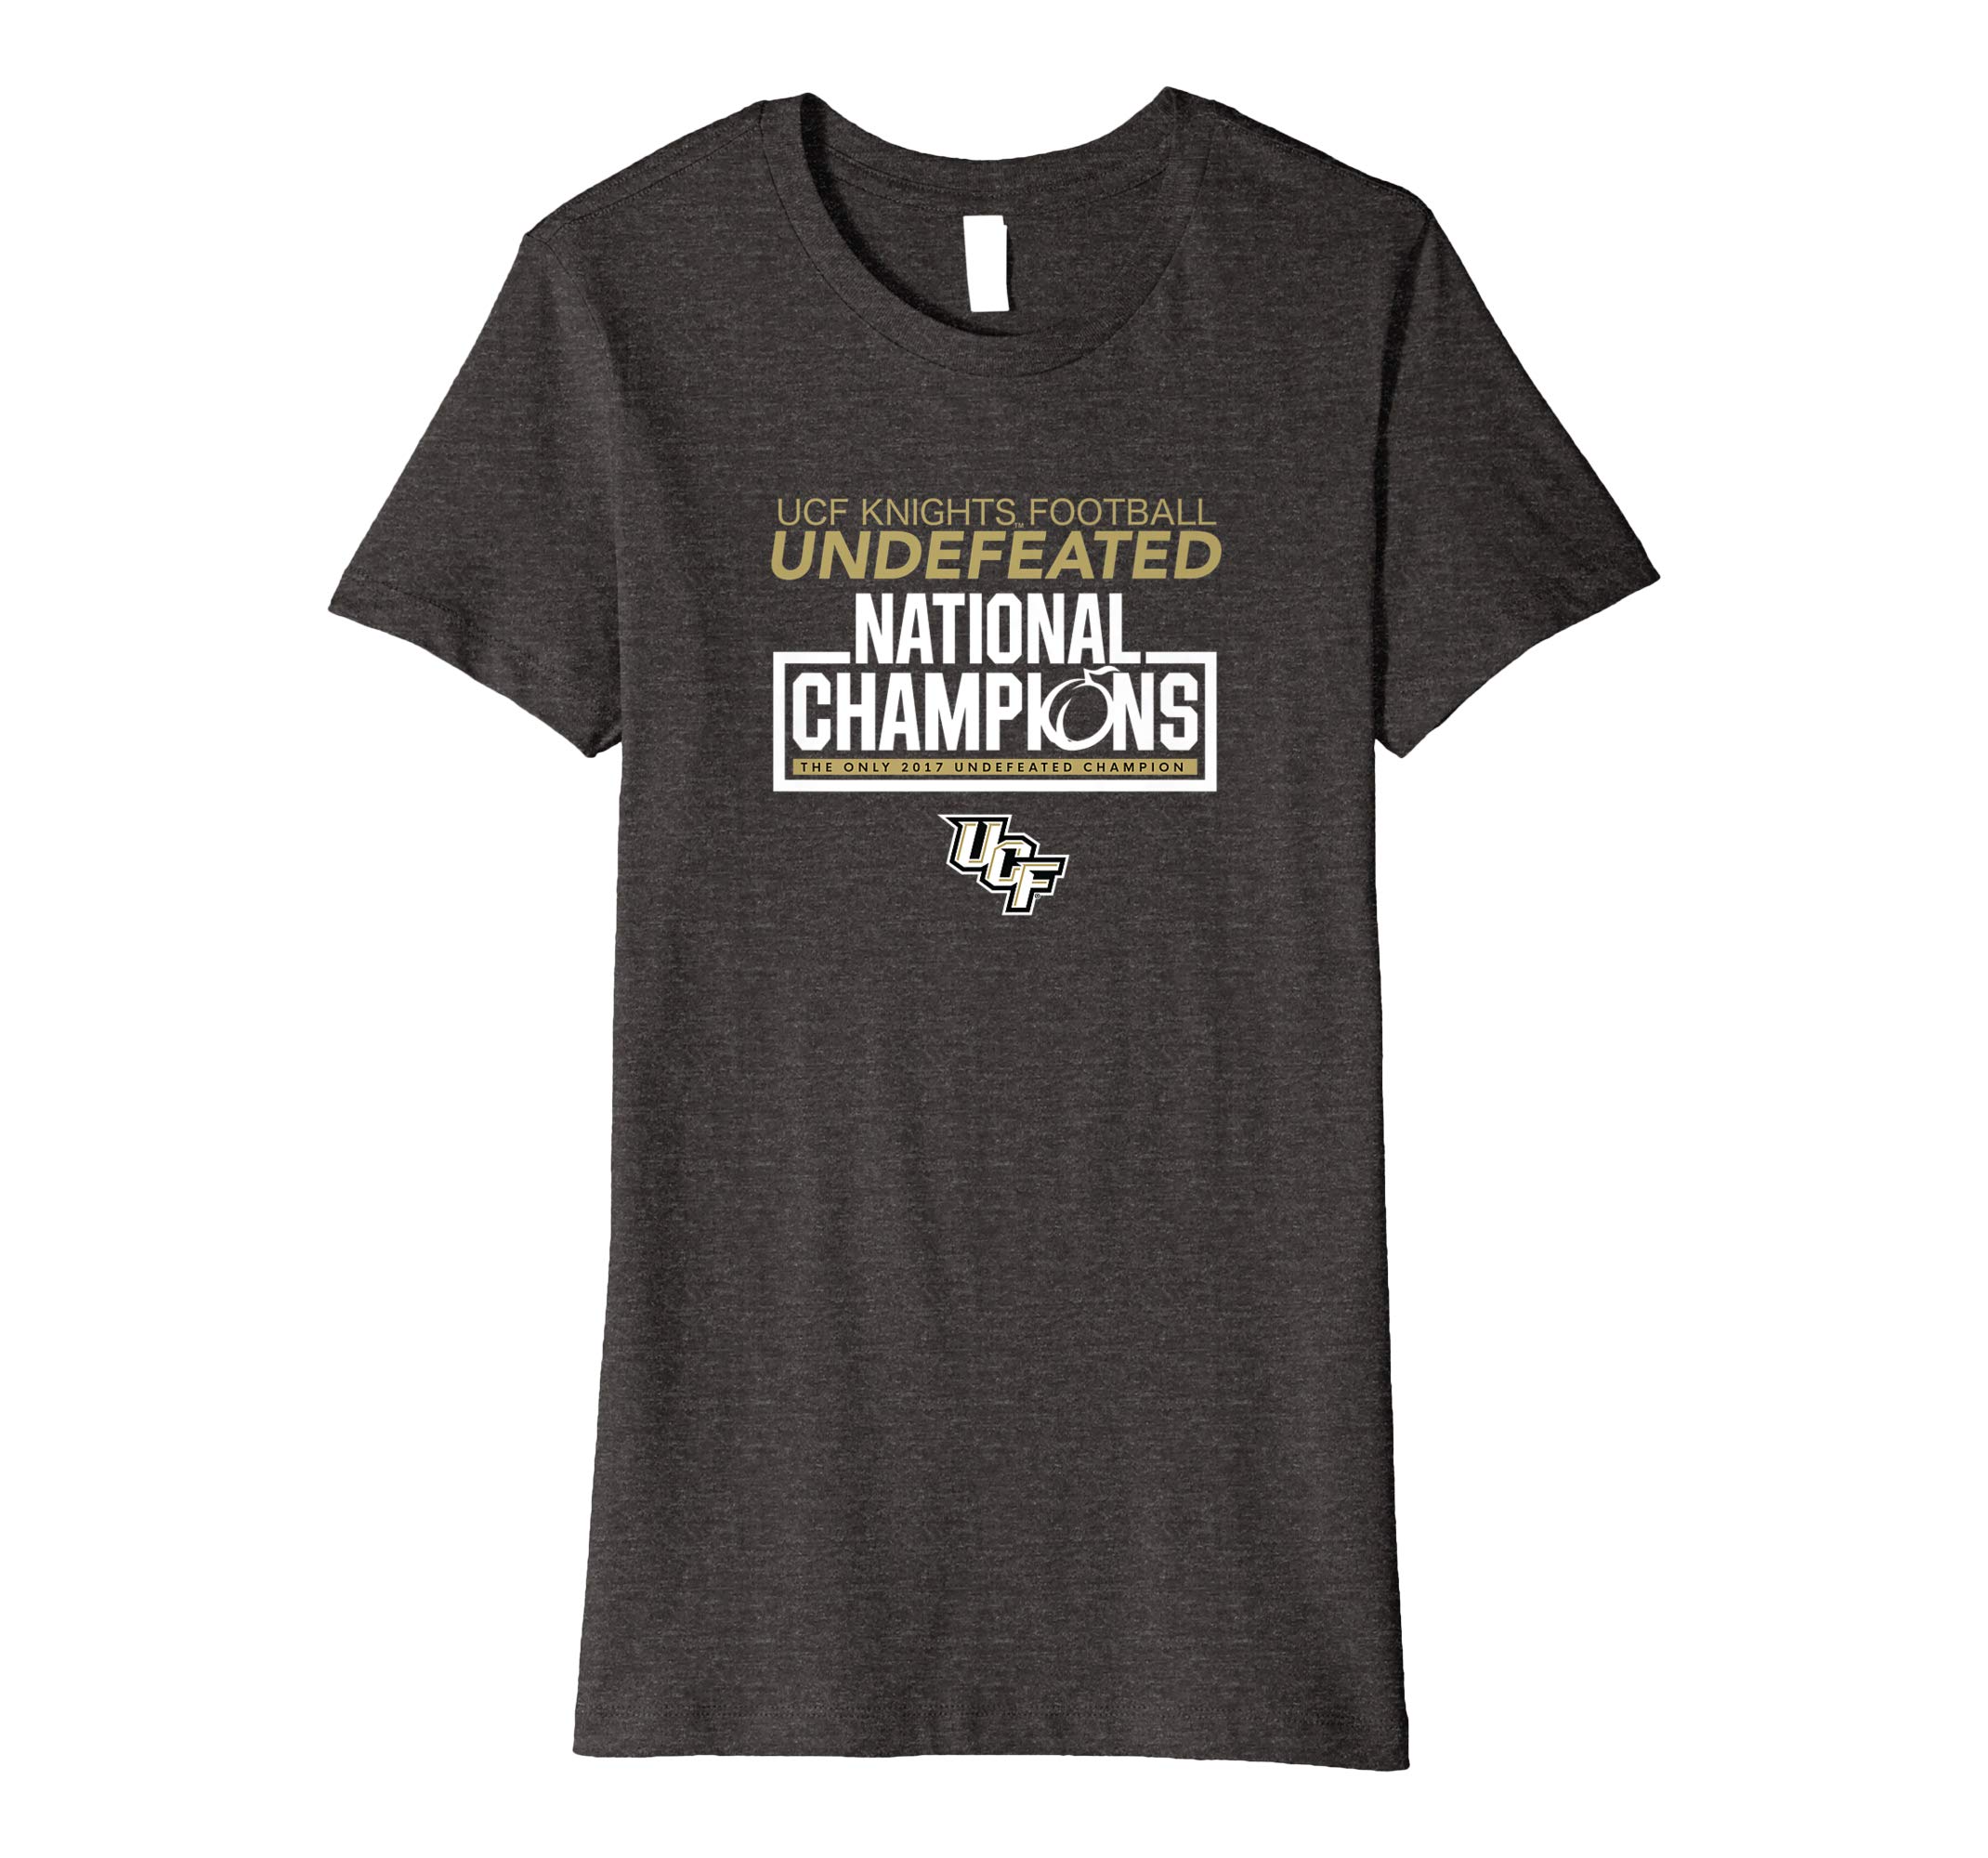 Undefeated Clothing Logo - Amazon.com: UCF Knights Undefeated National Champions T-Shirt ...